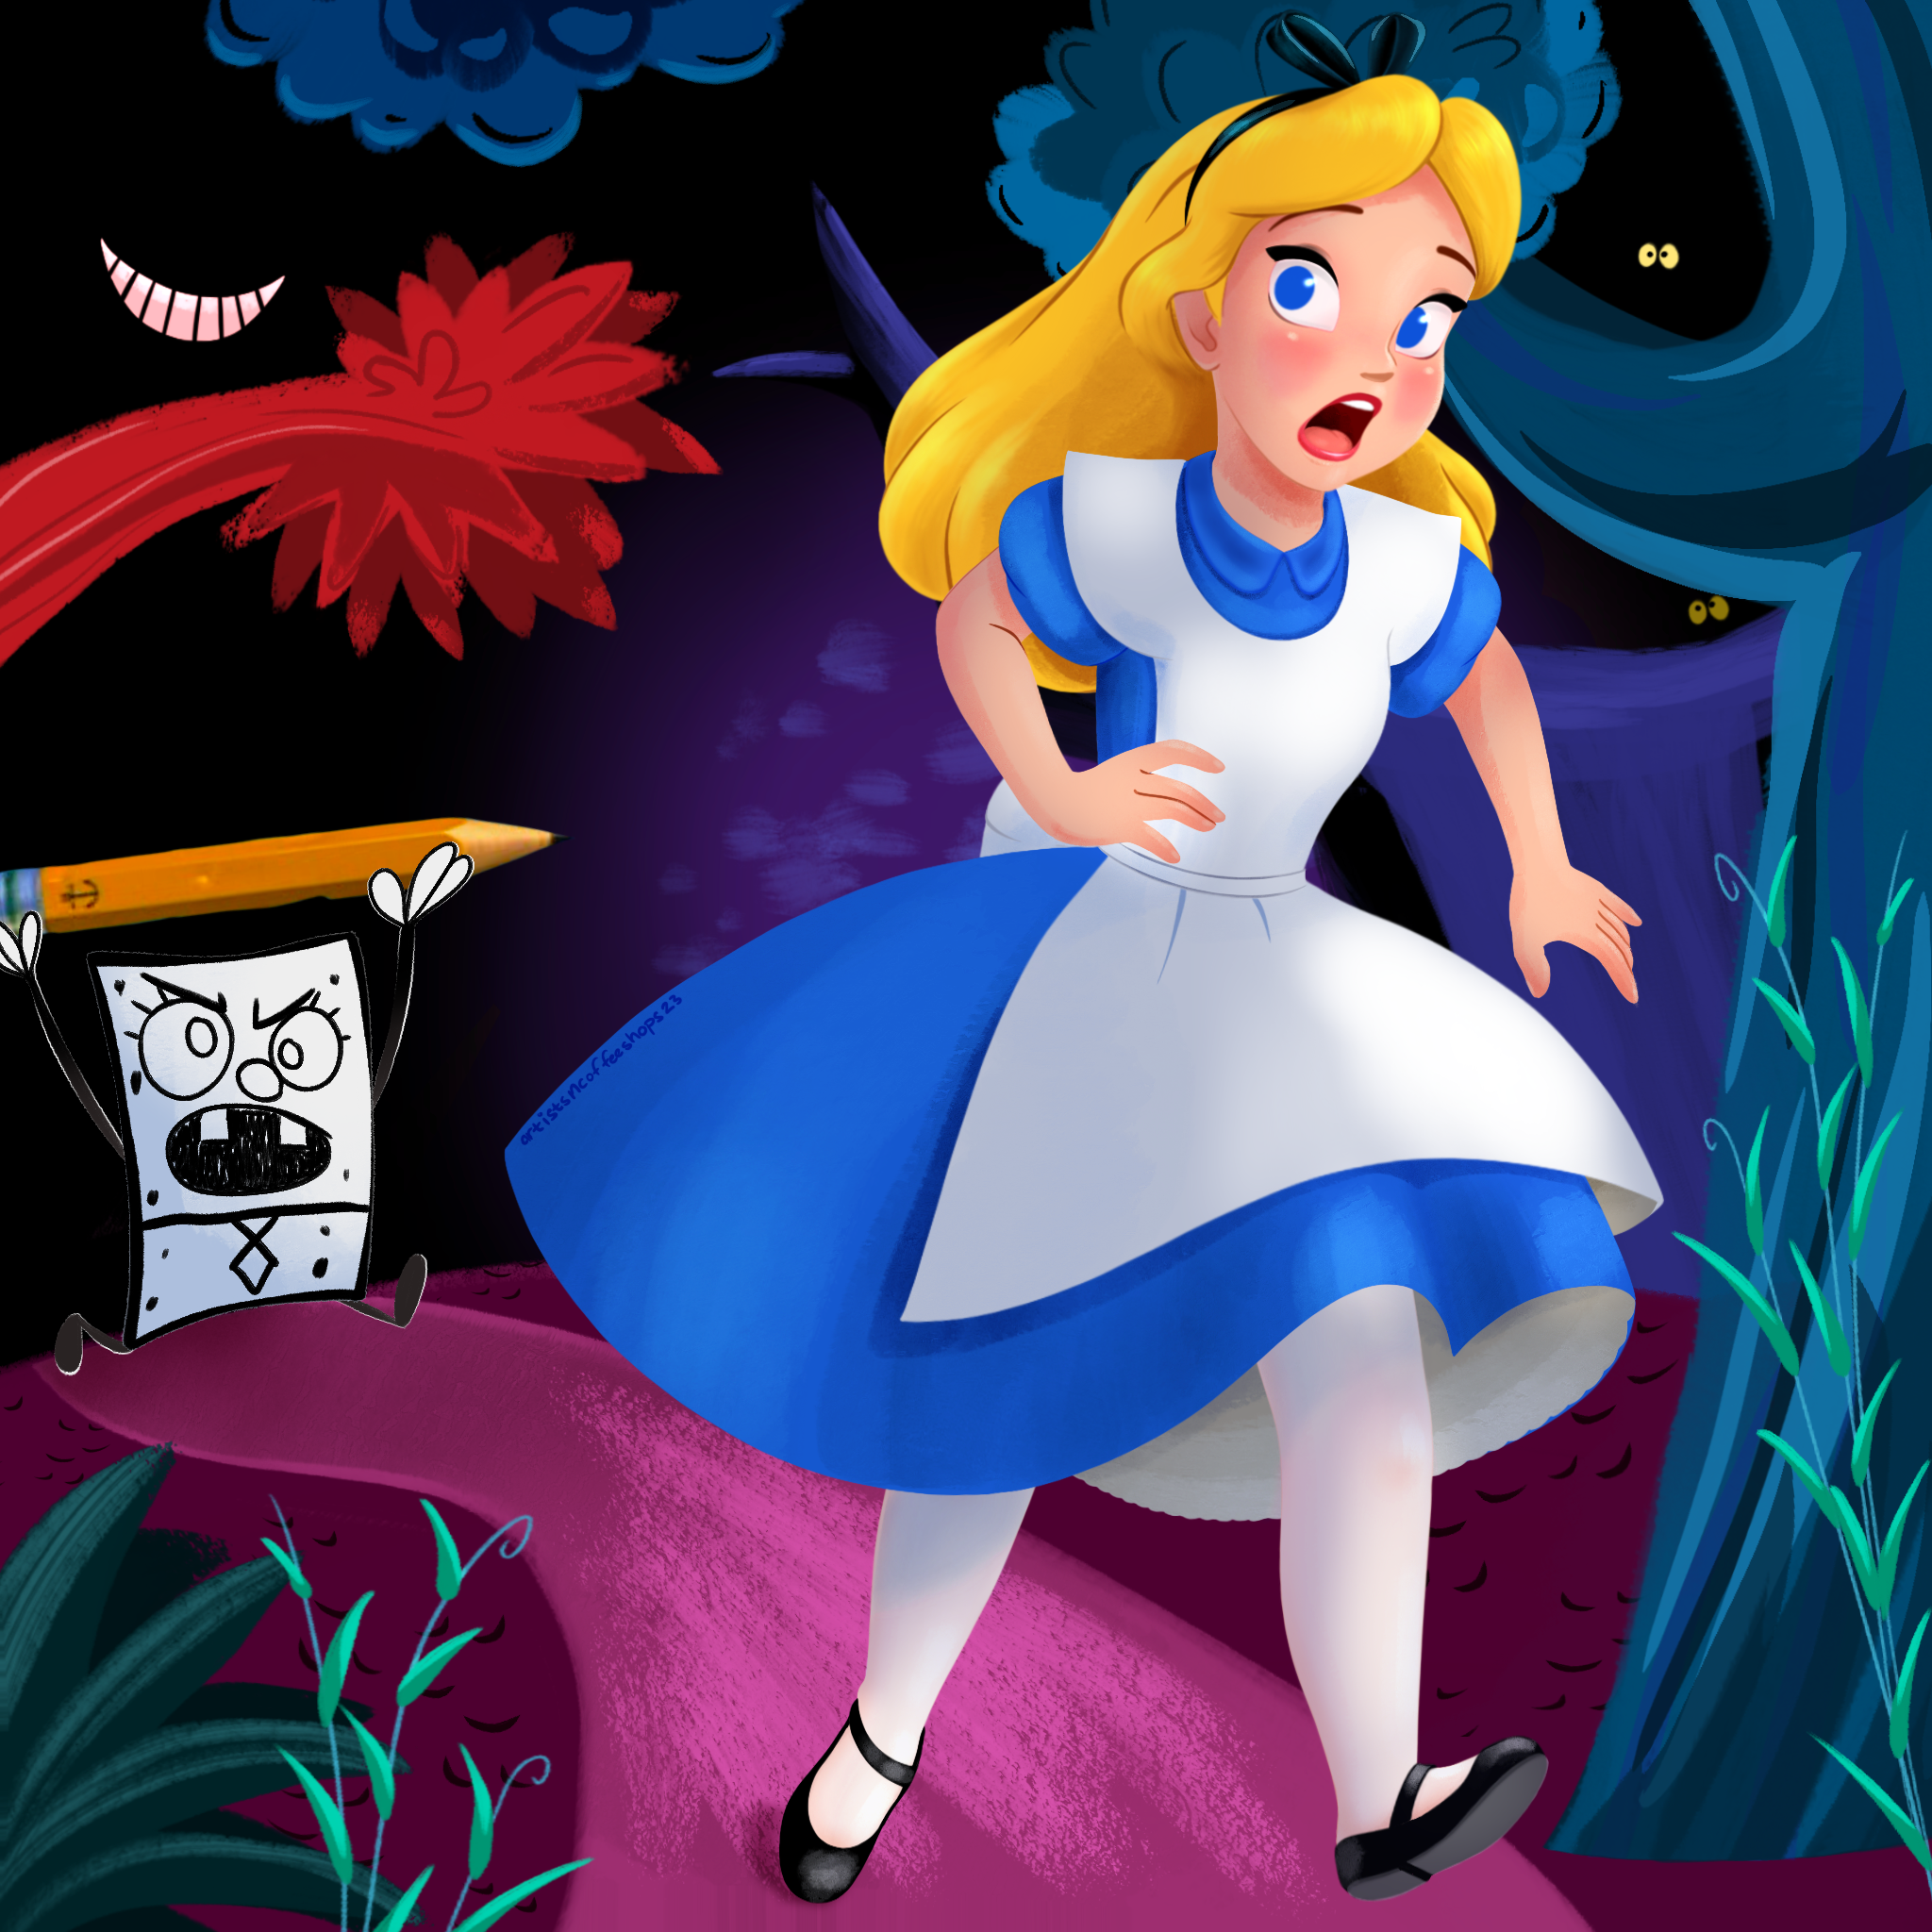 V/A Alice in Wonderland